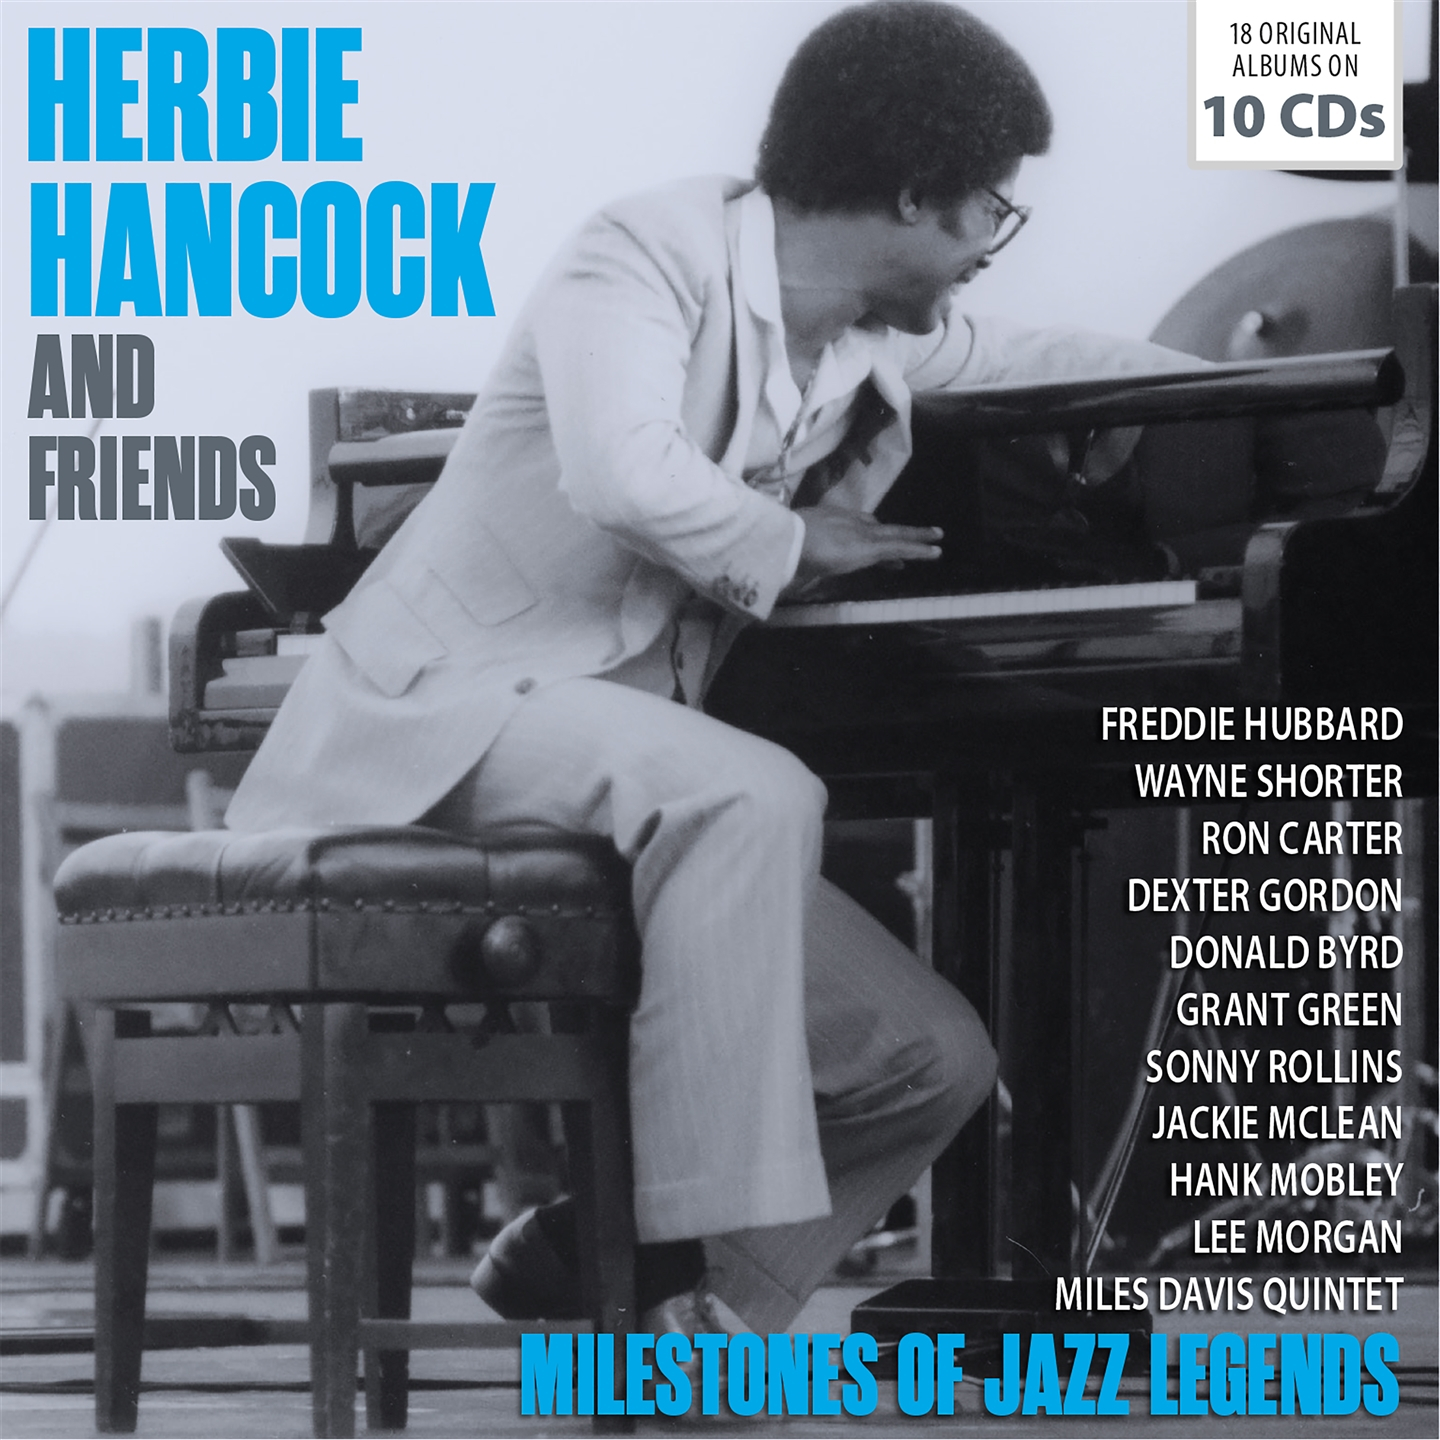 HERBIE HANCOCK & FRIENDS